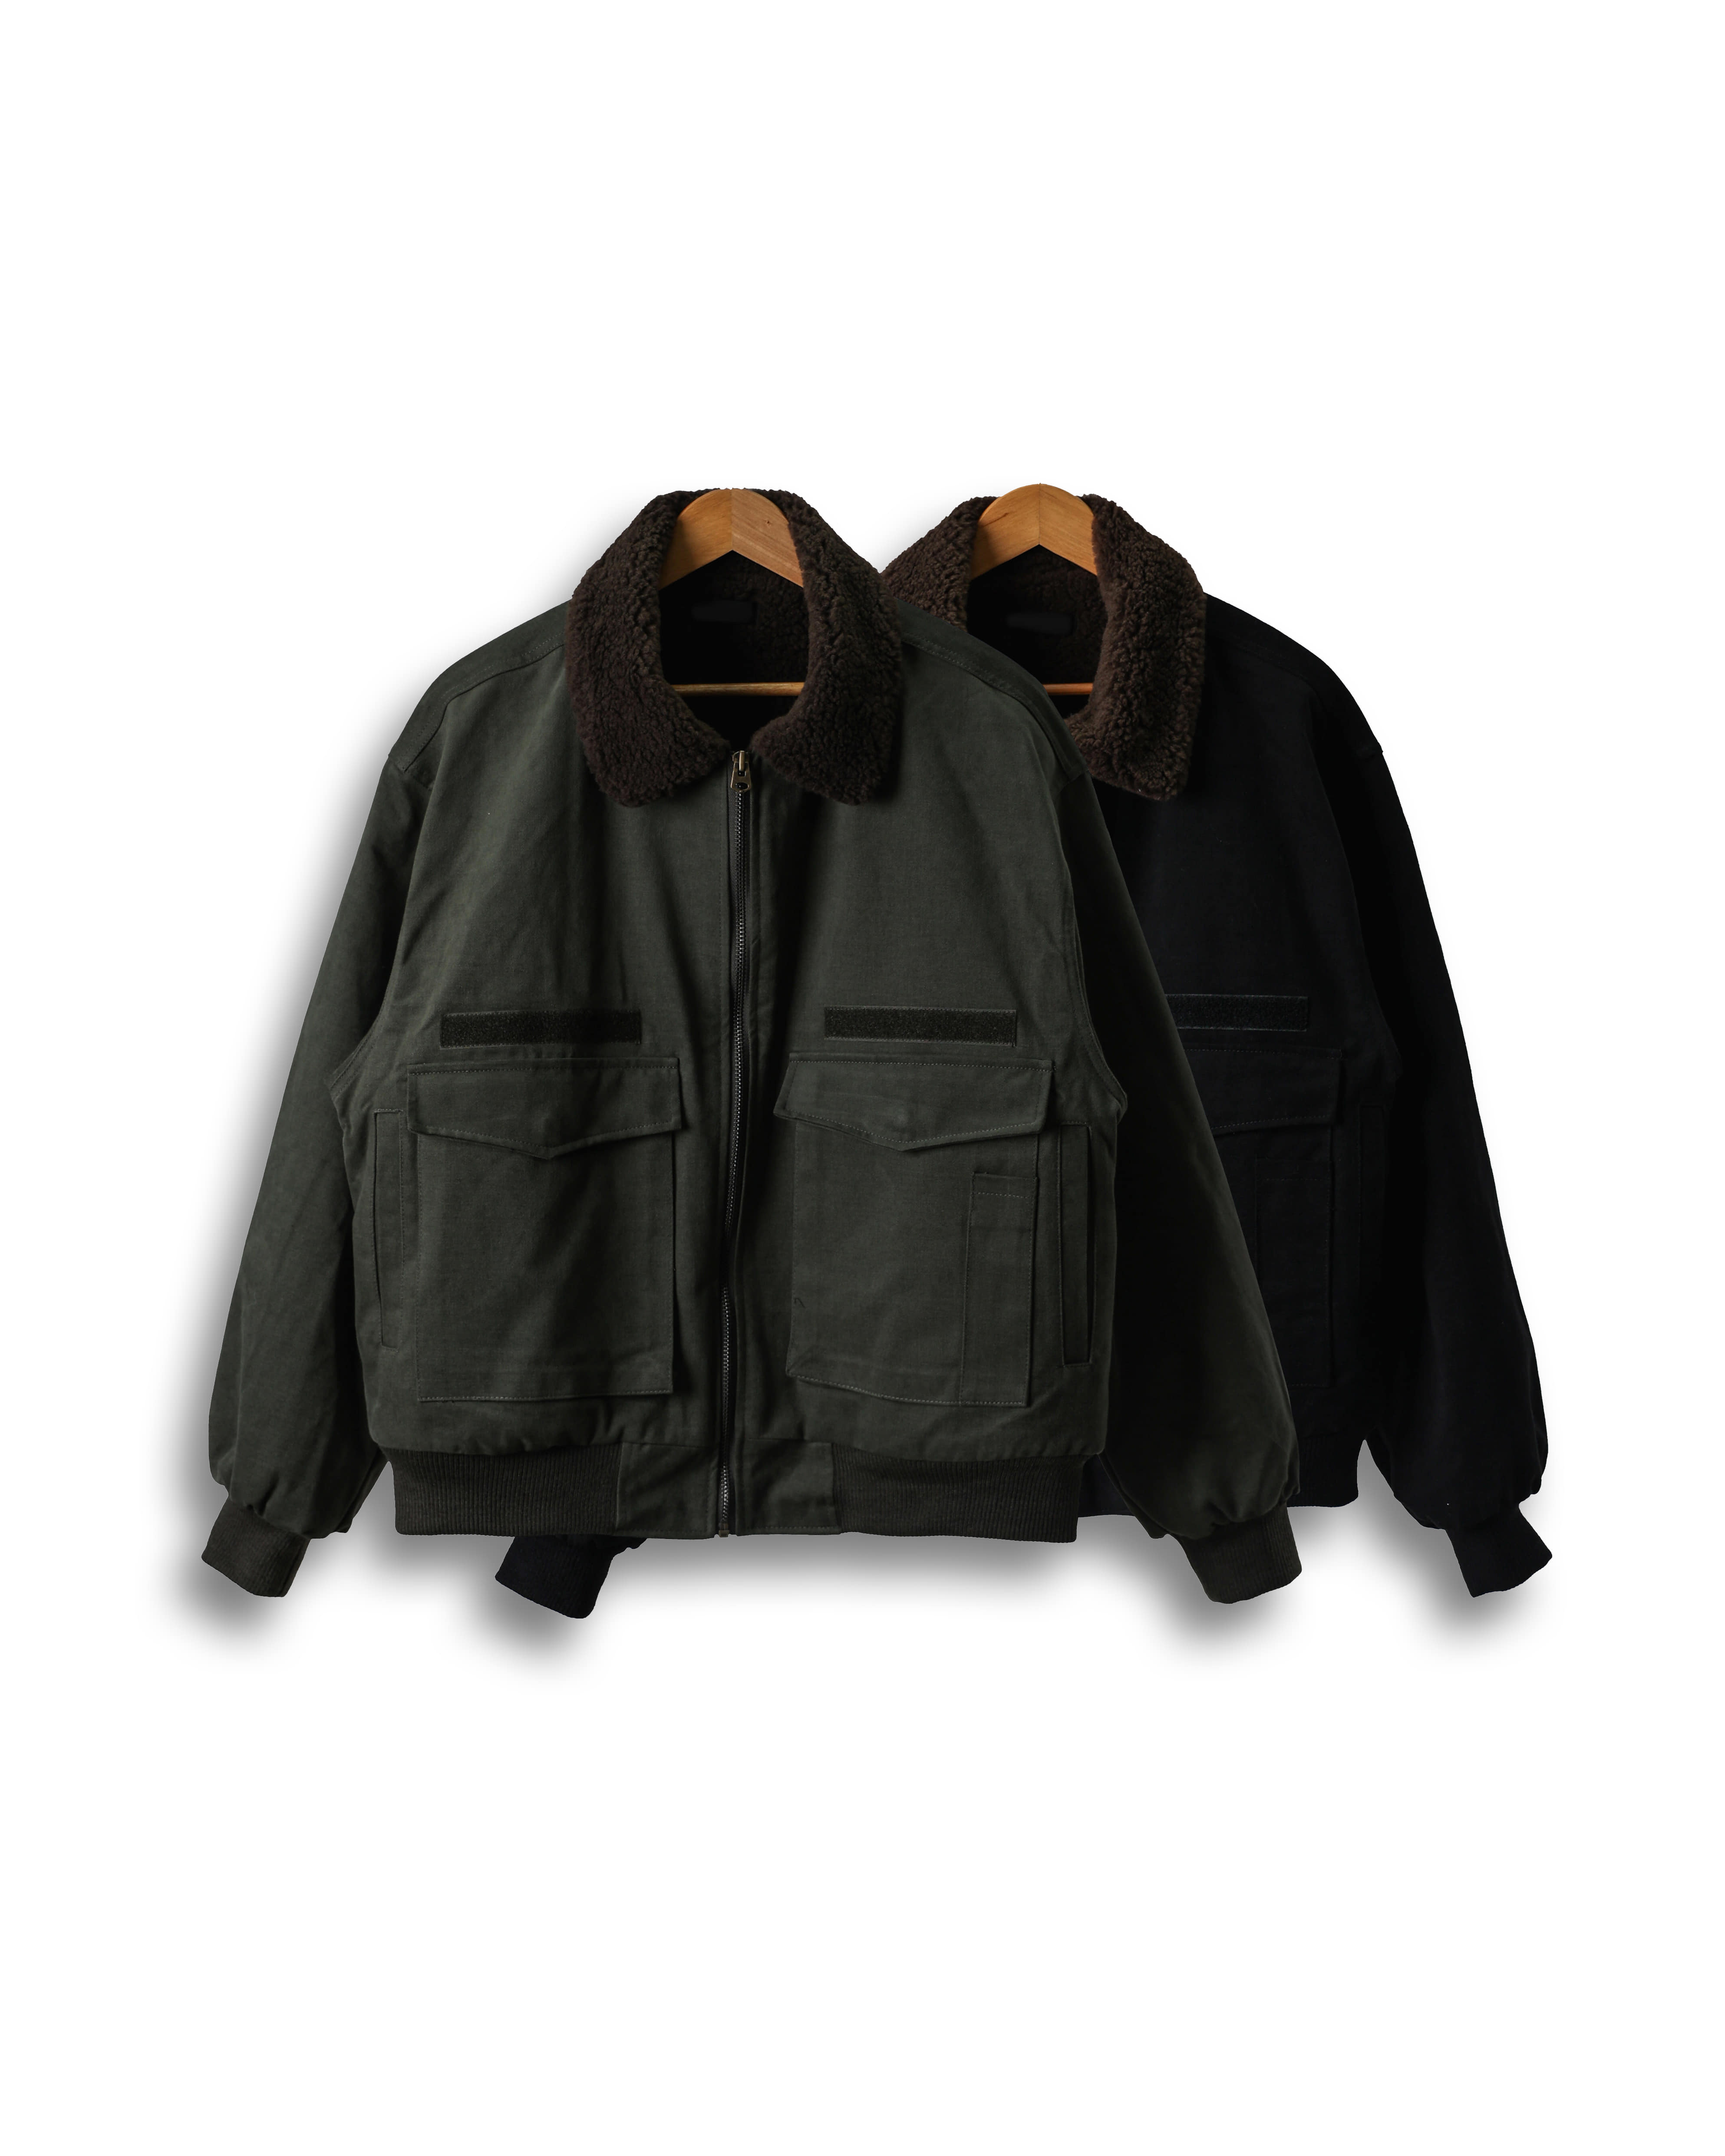 OTHER Fleece Dumbling Deck Jacket (Black/Khaki) -  14차 리오더 (3/4 배송예정)